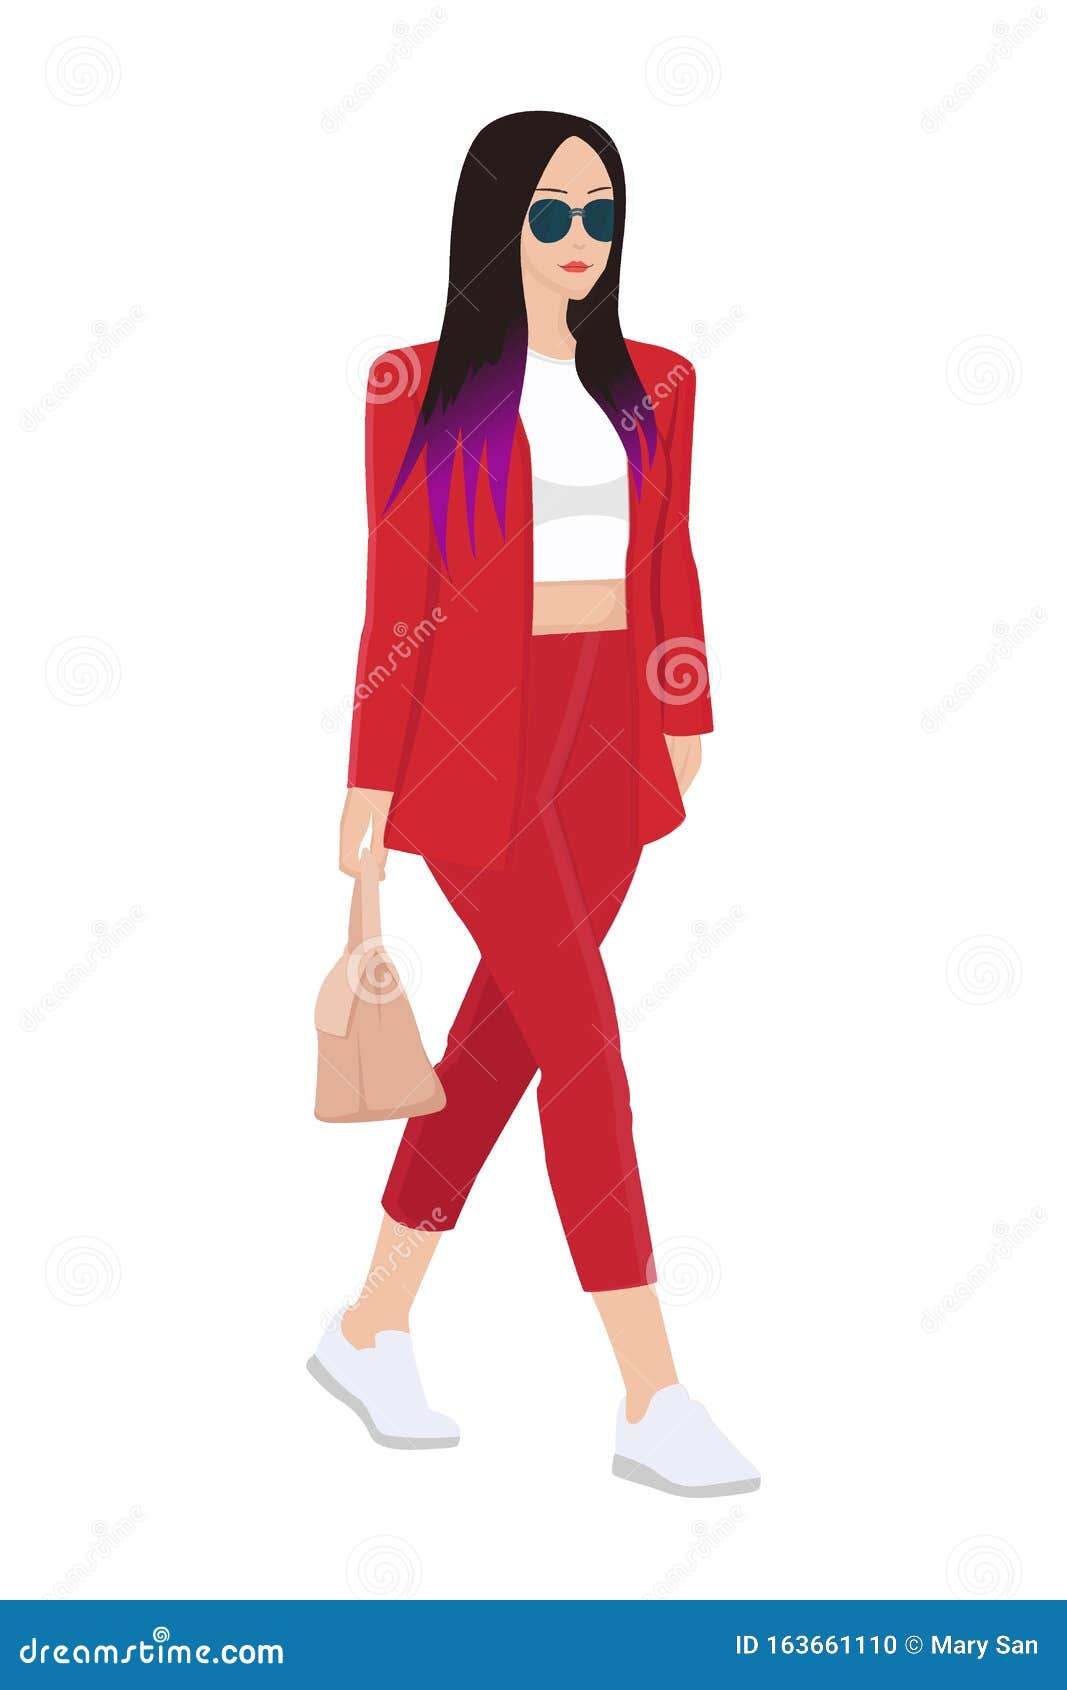 https://thumbs.dreamstime.com/z/women-dressed-stylish-trendy-clothes-female-fashion-illustration-women-dressed-stylish-trendy-clothes-fashion-girls-model-163661110.jpg